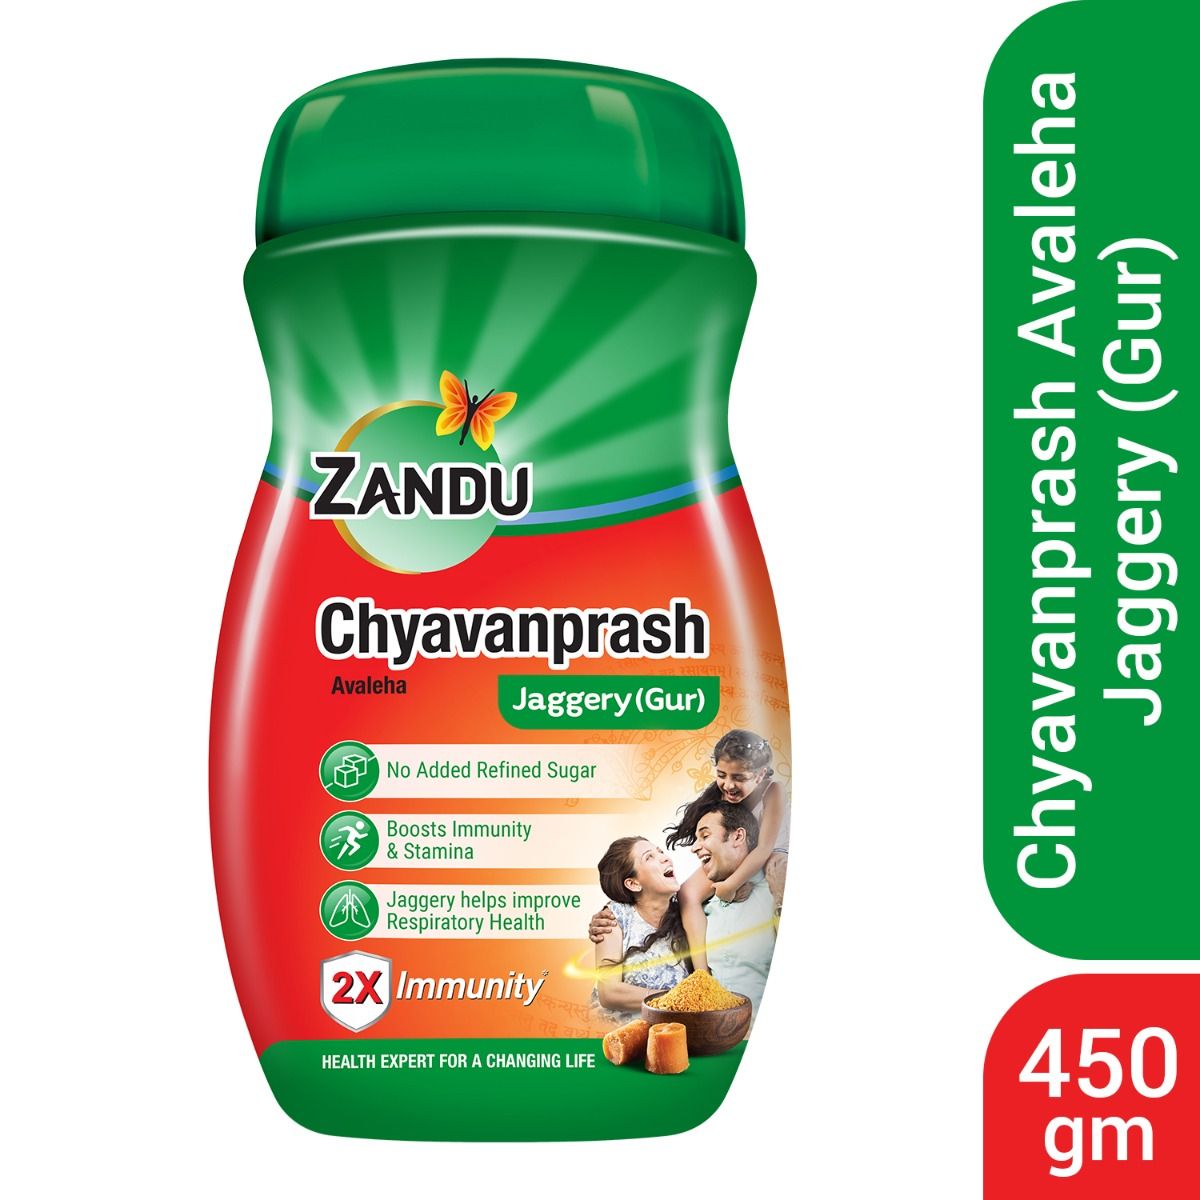 Zandu Chyavanprash Avaleha Jaggery(Gur), 450 gm, Pack of 1 